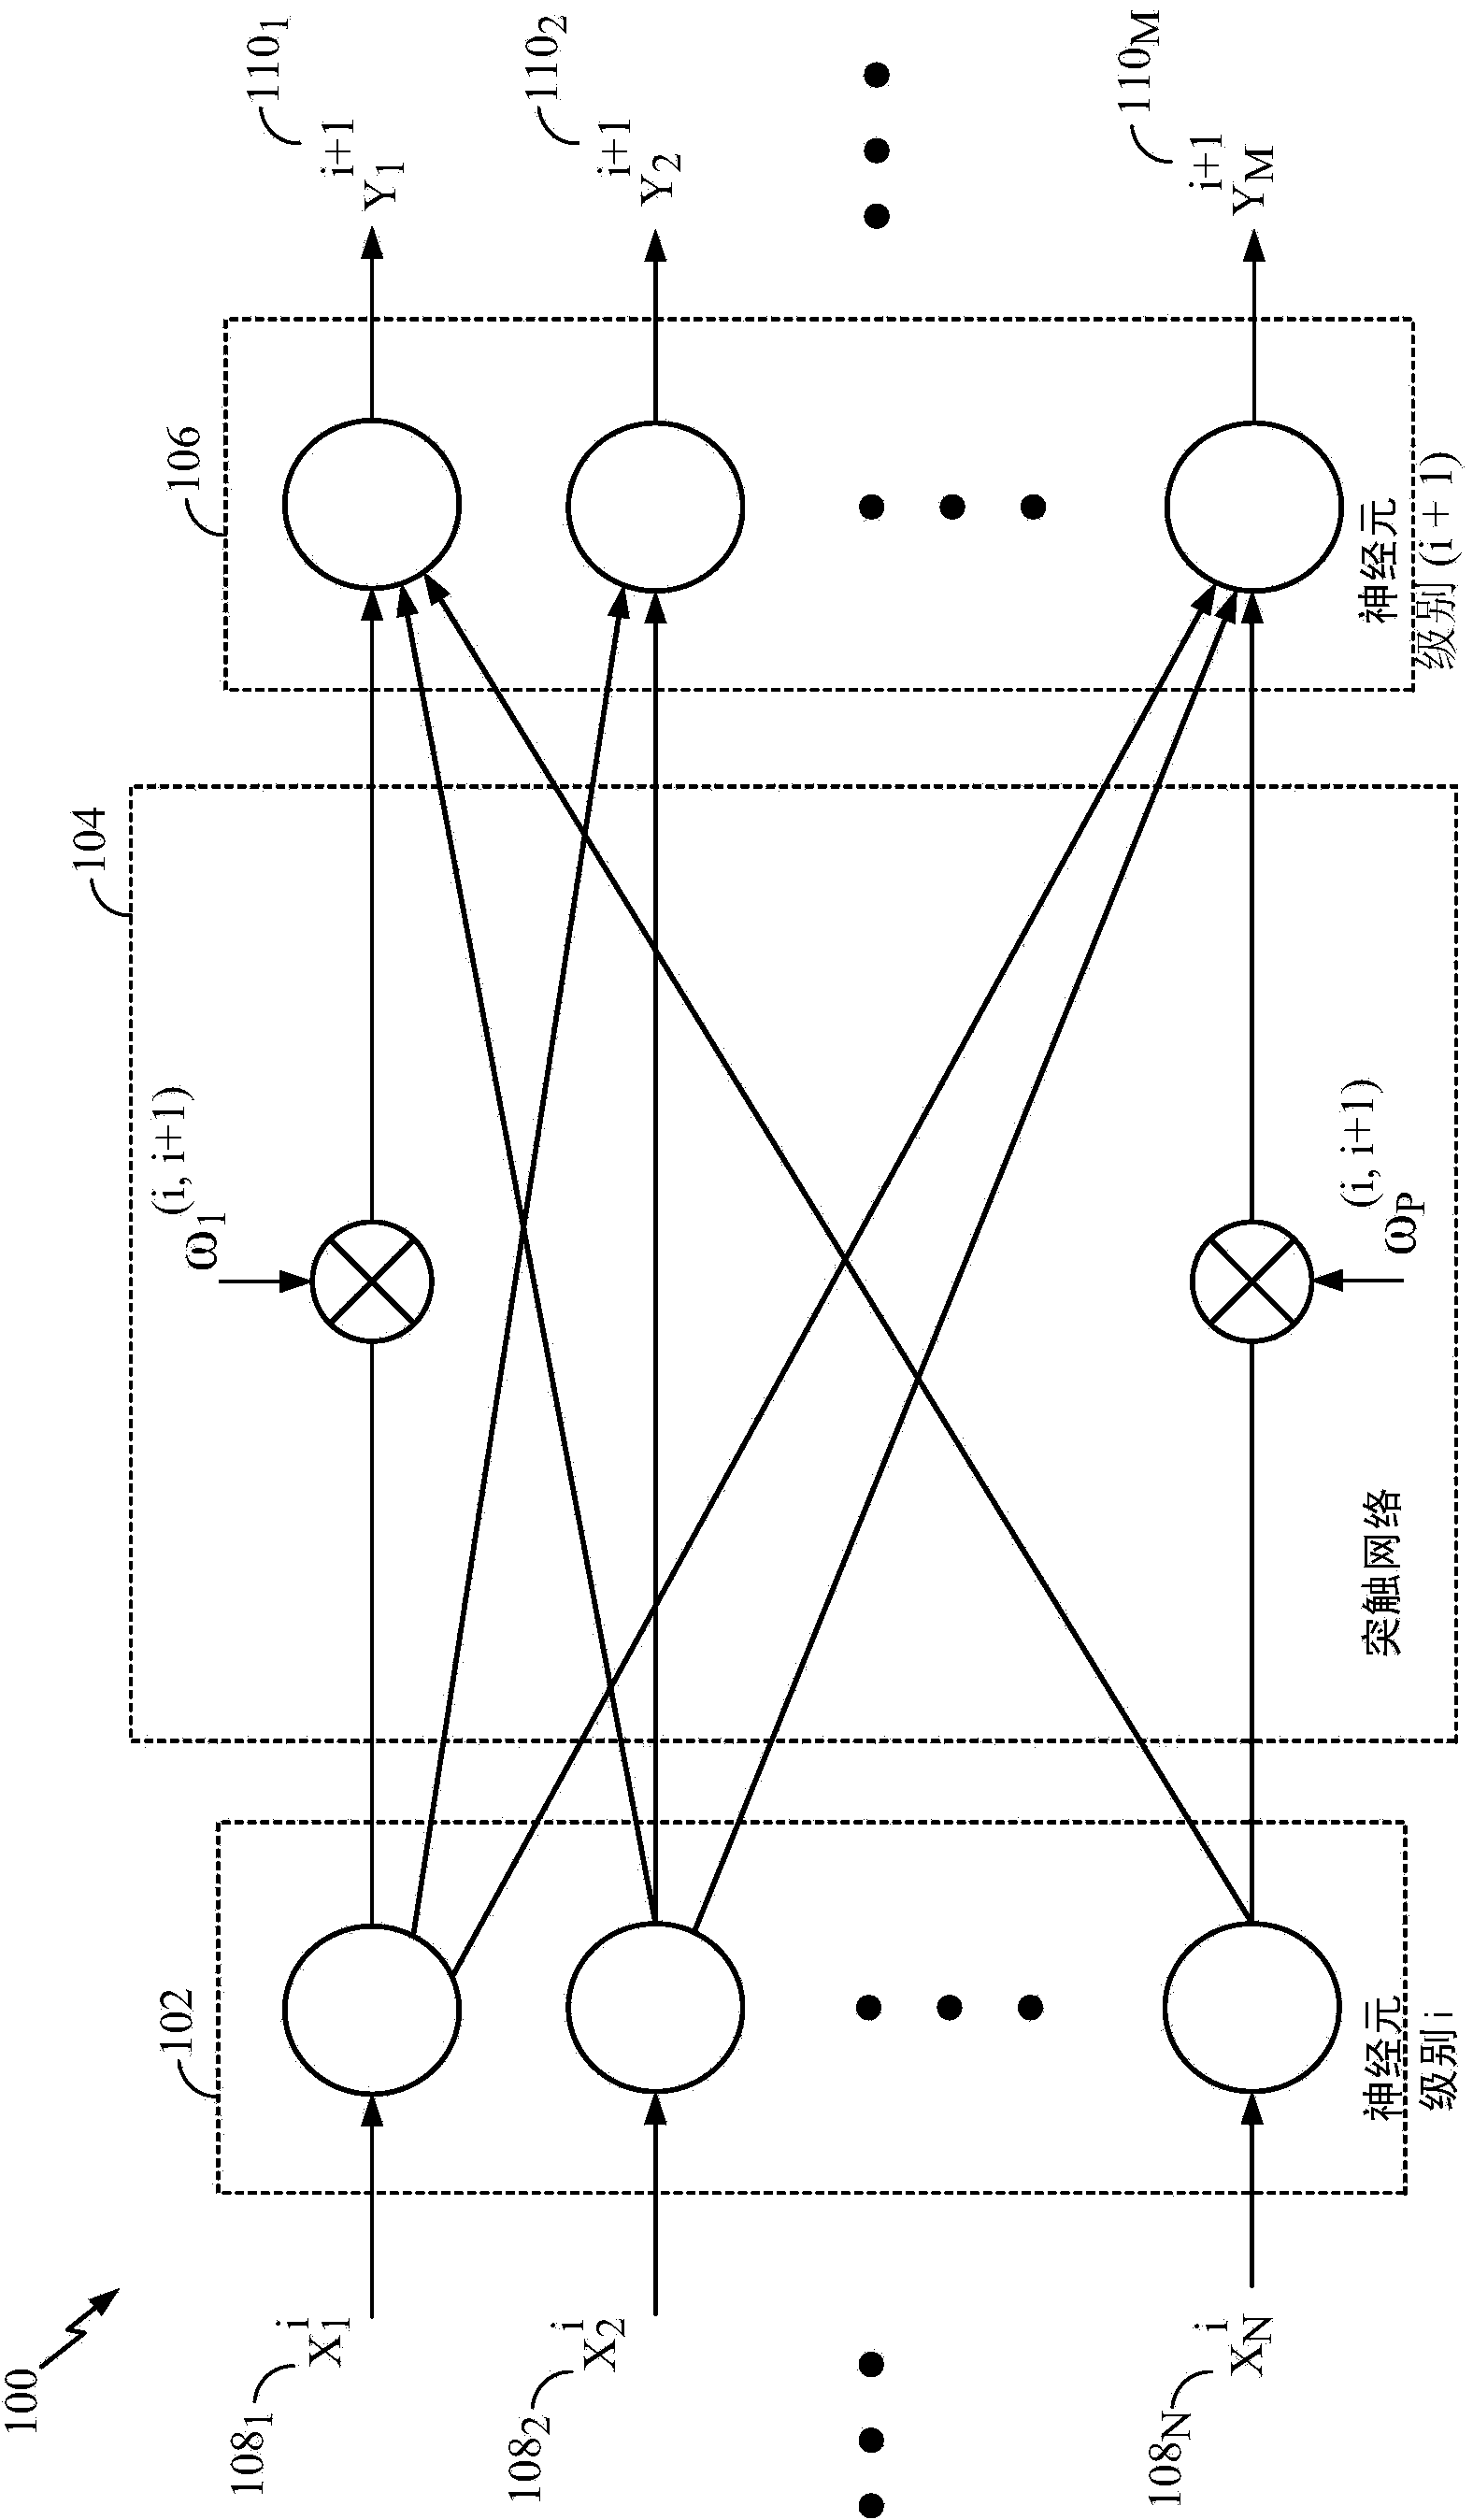 Method and apparatus of neuronal firing modulation via noise control